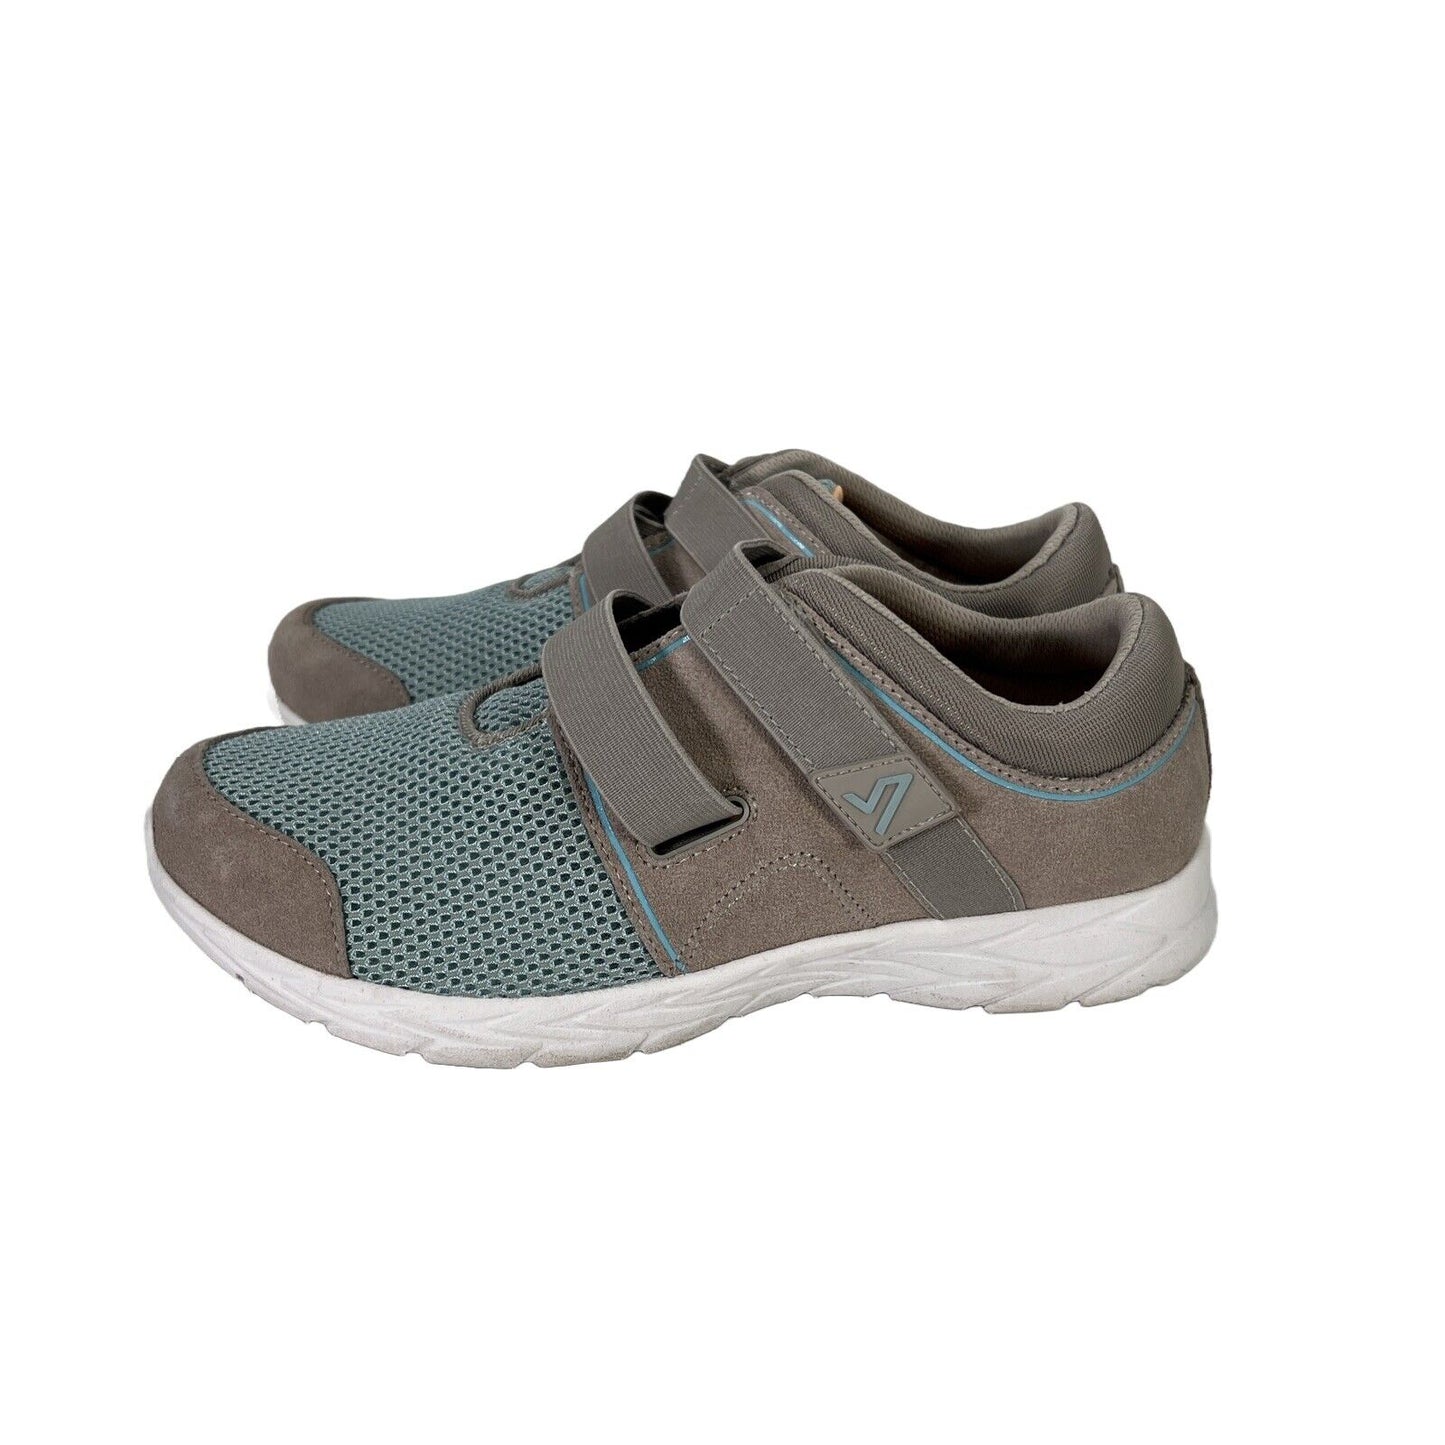 Vionic Women's Blue/Gray Ema Comfort Walking Sneakers - 9